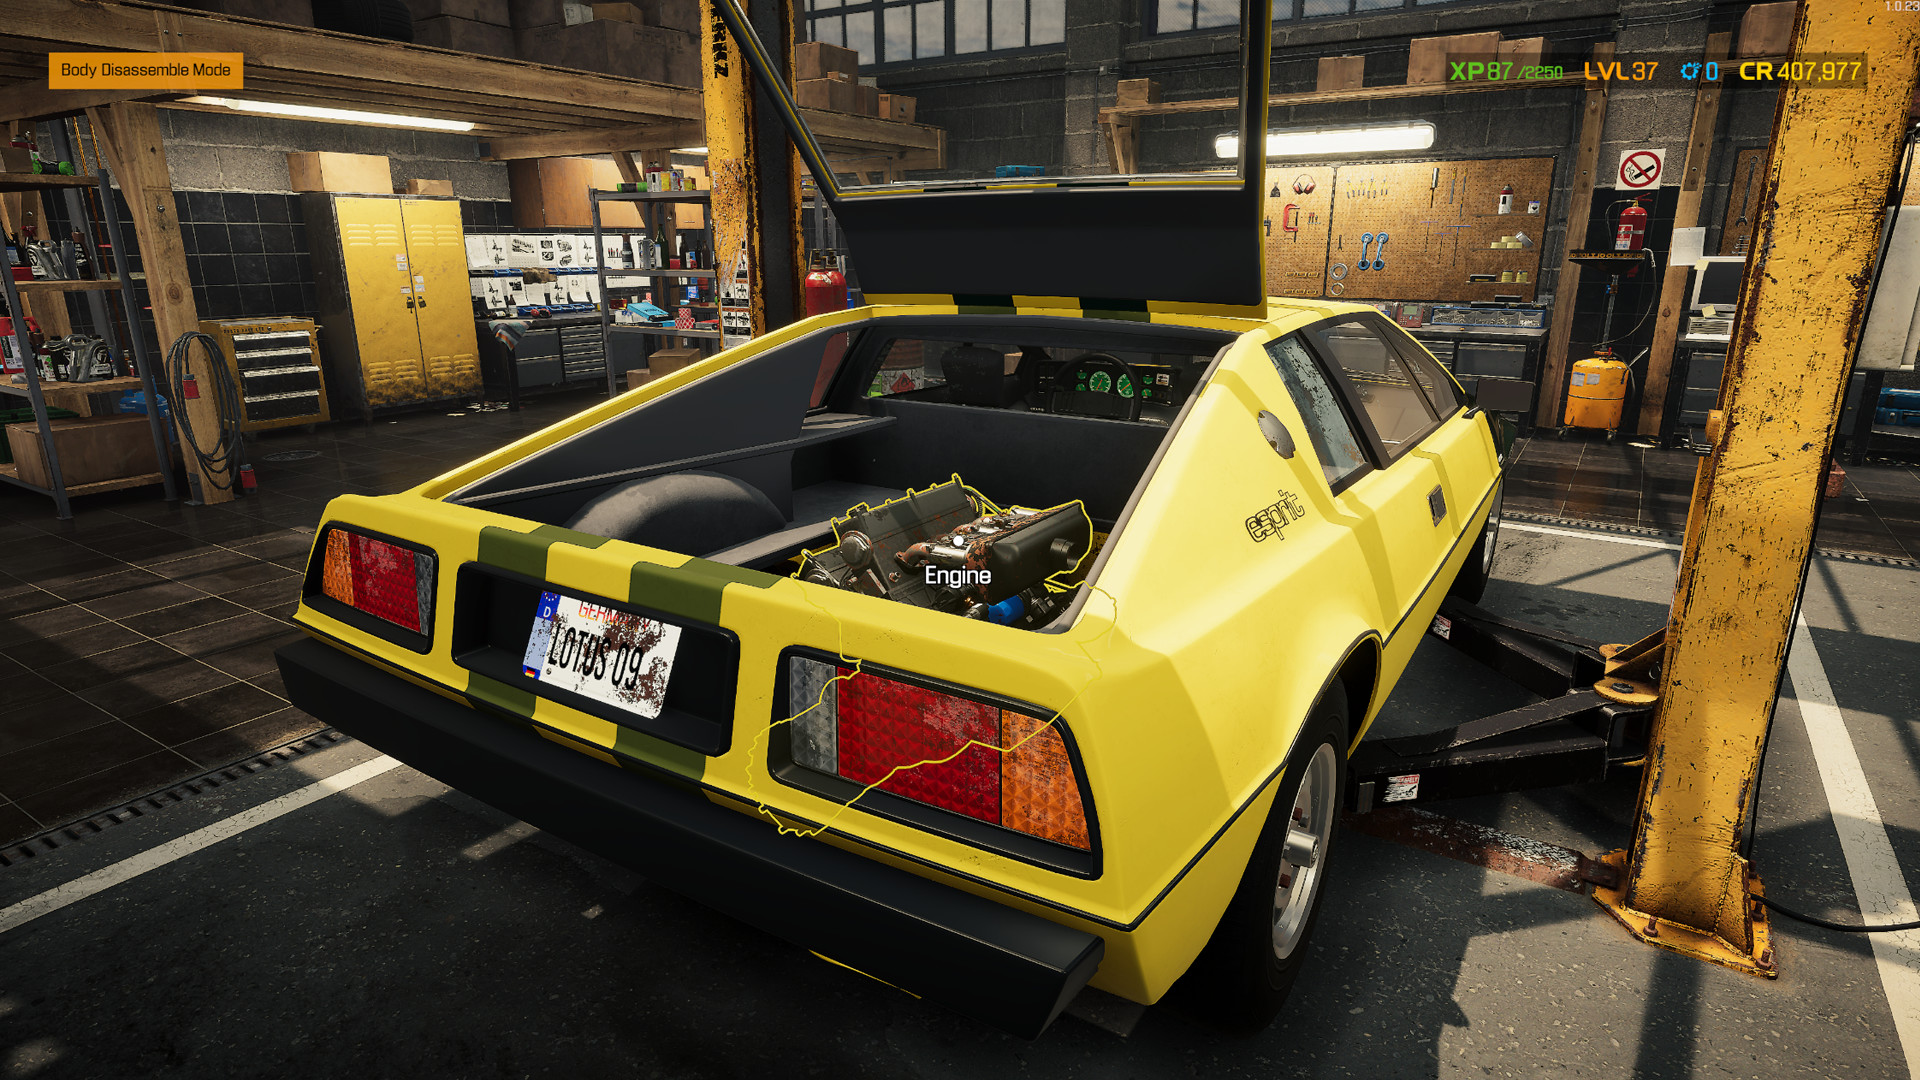 Car Mechanic Simulator 2021 - Lotus Remastered DLC AR XBOX One / Xbox Series X,S CD Key